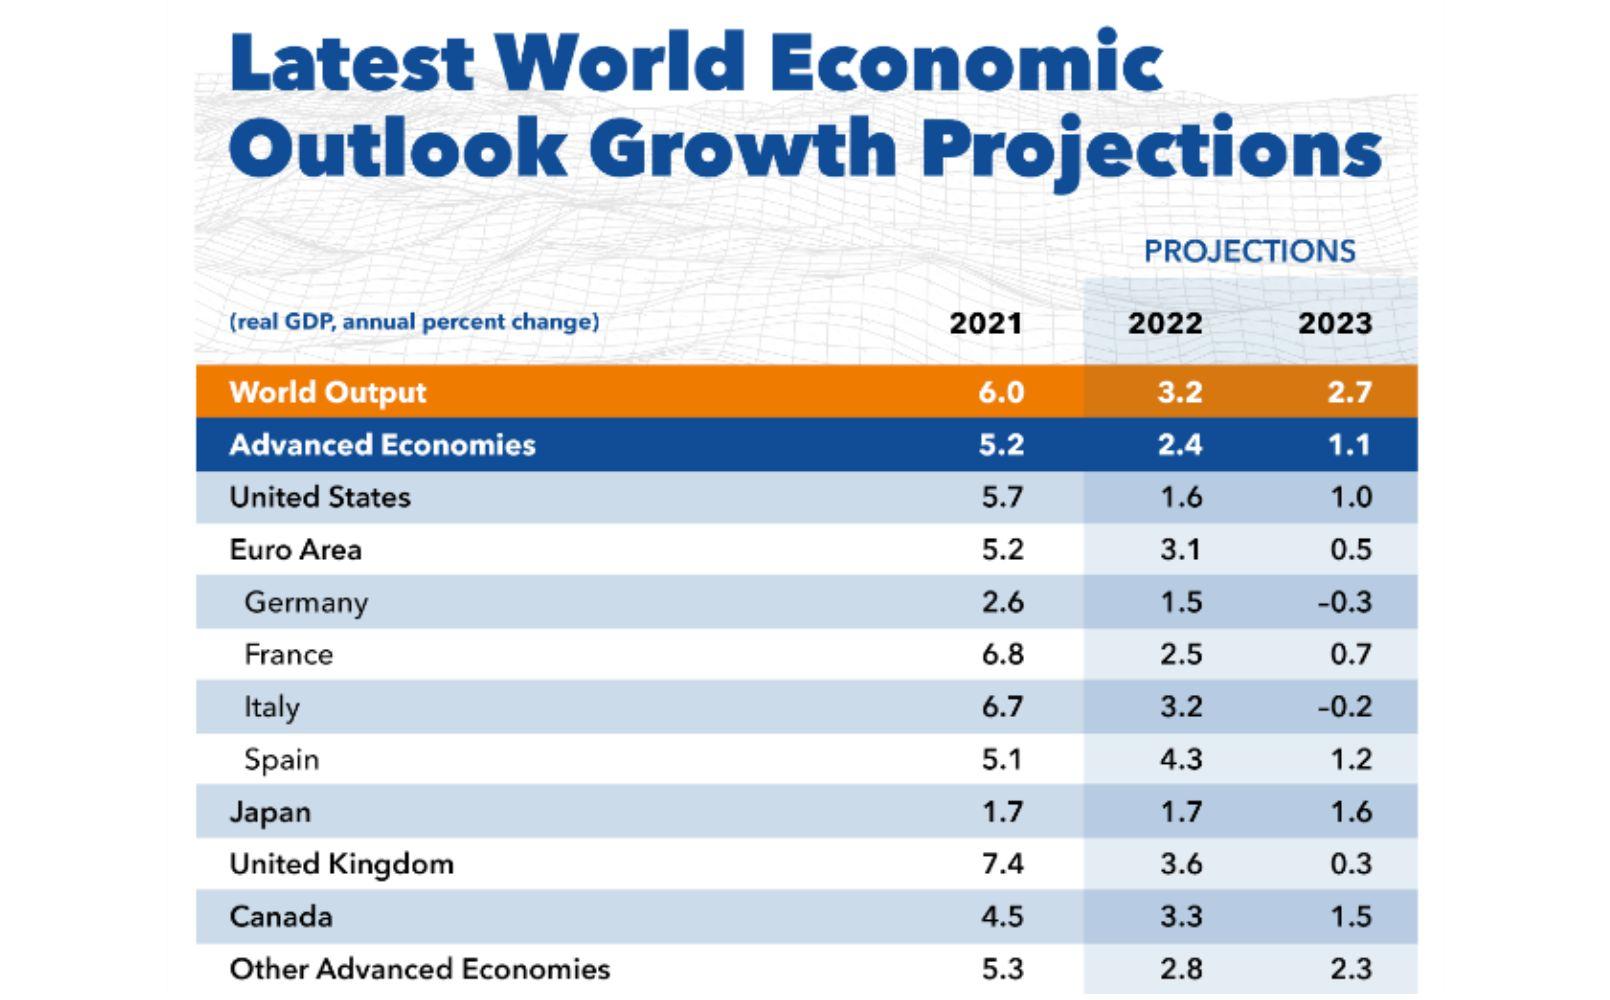 Economic growth forecast